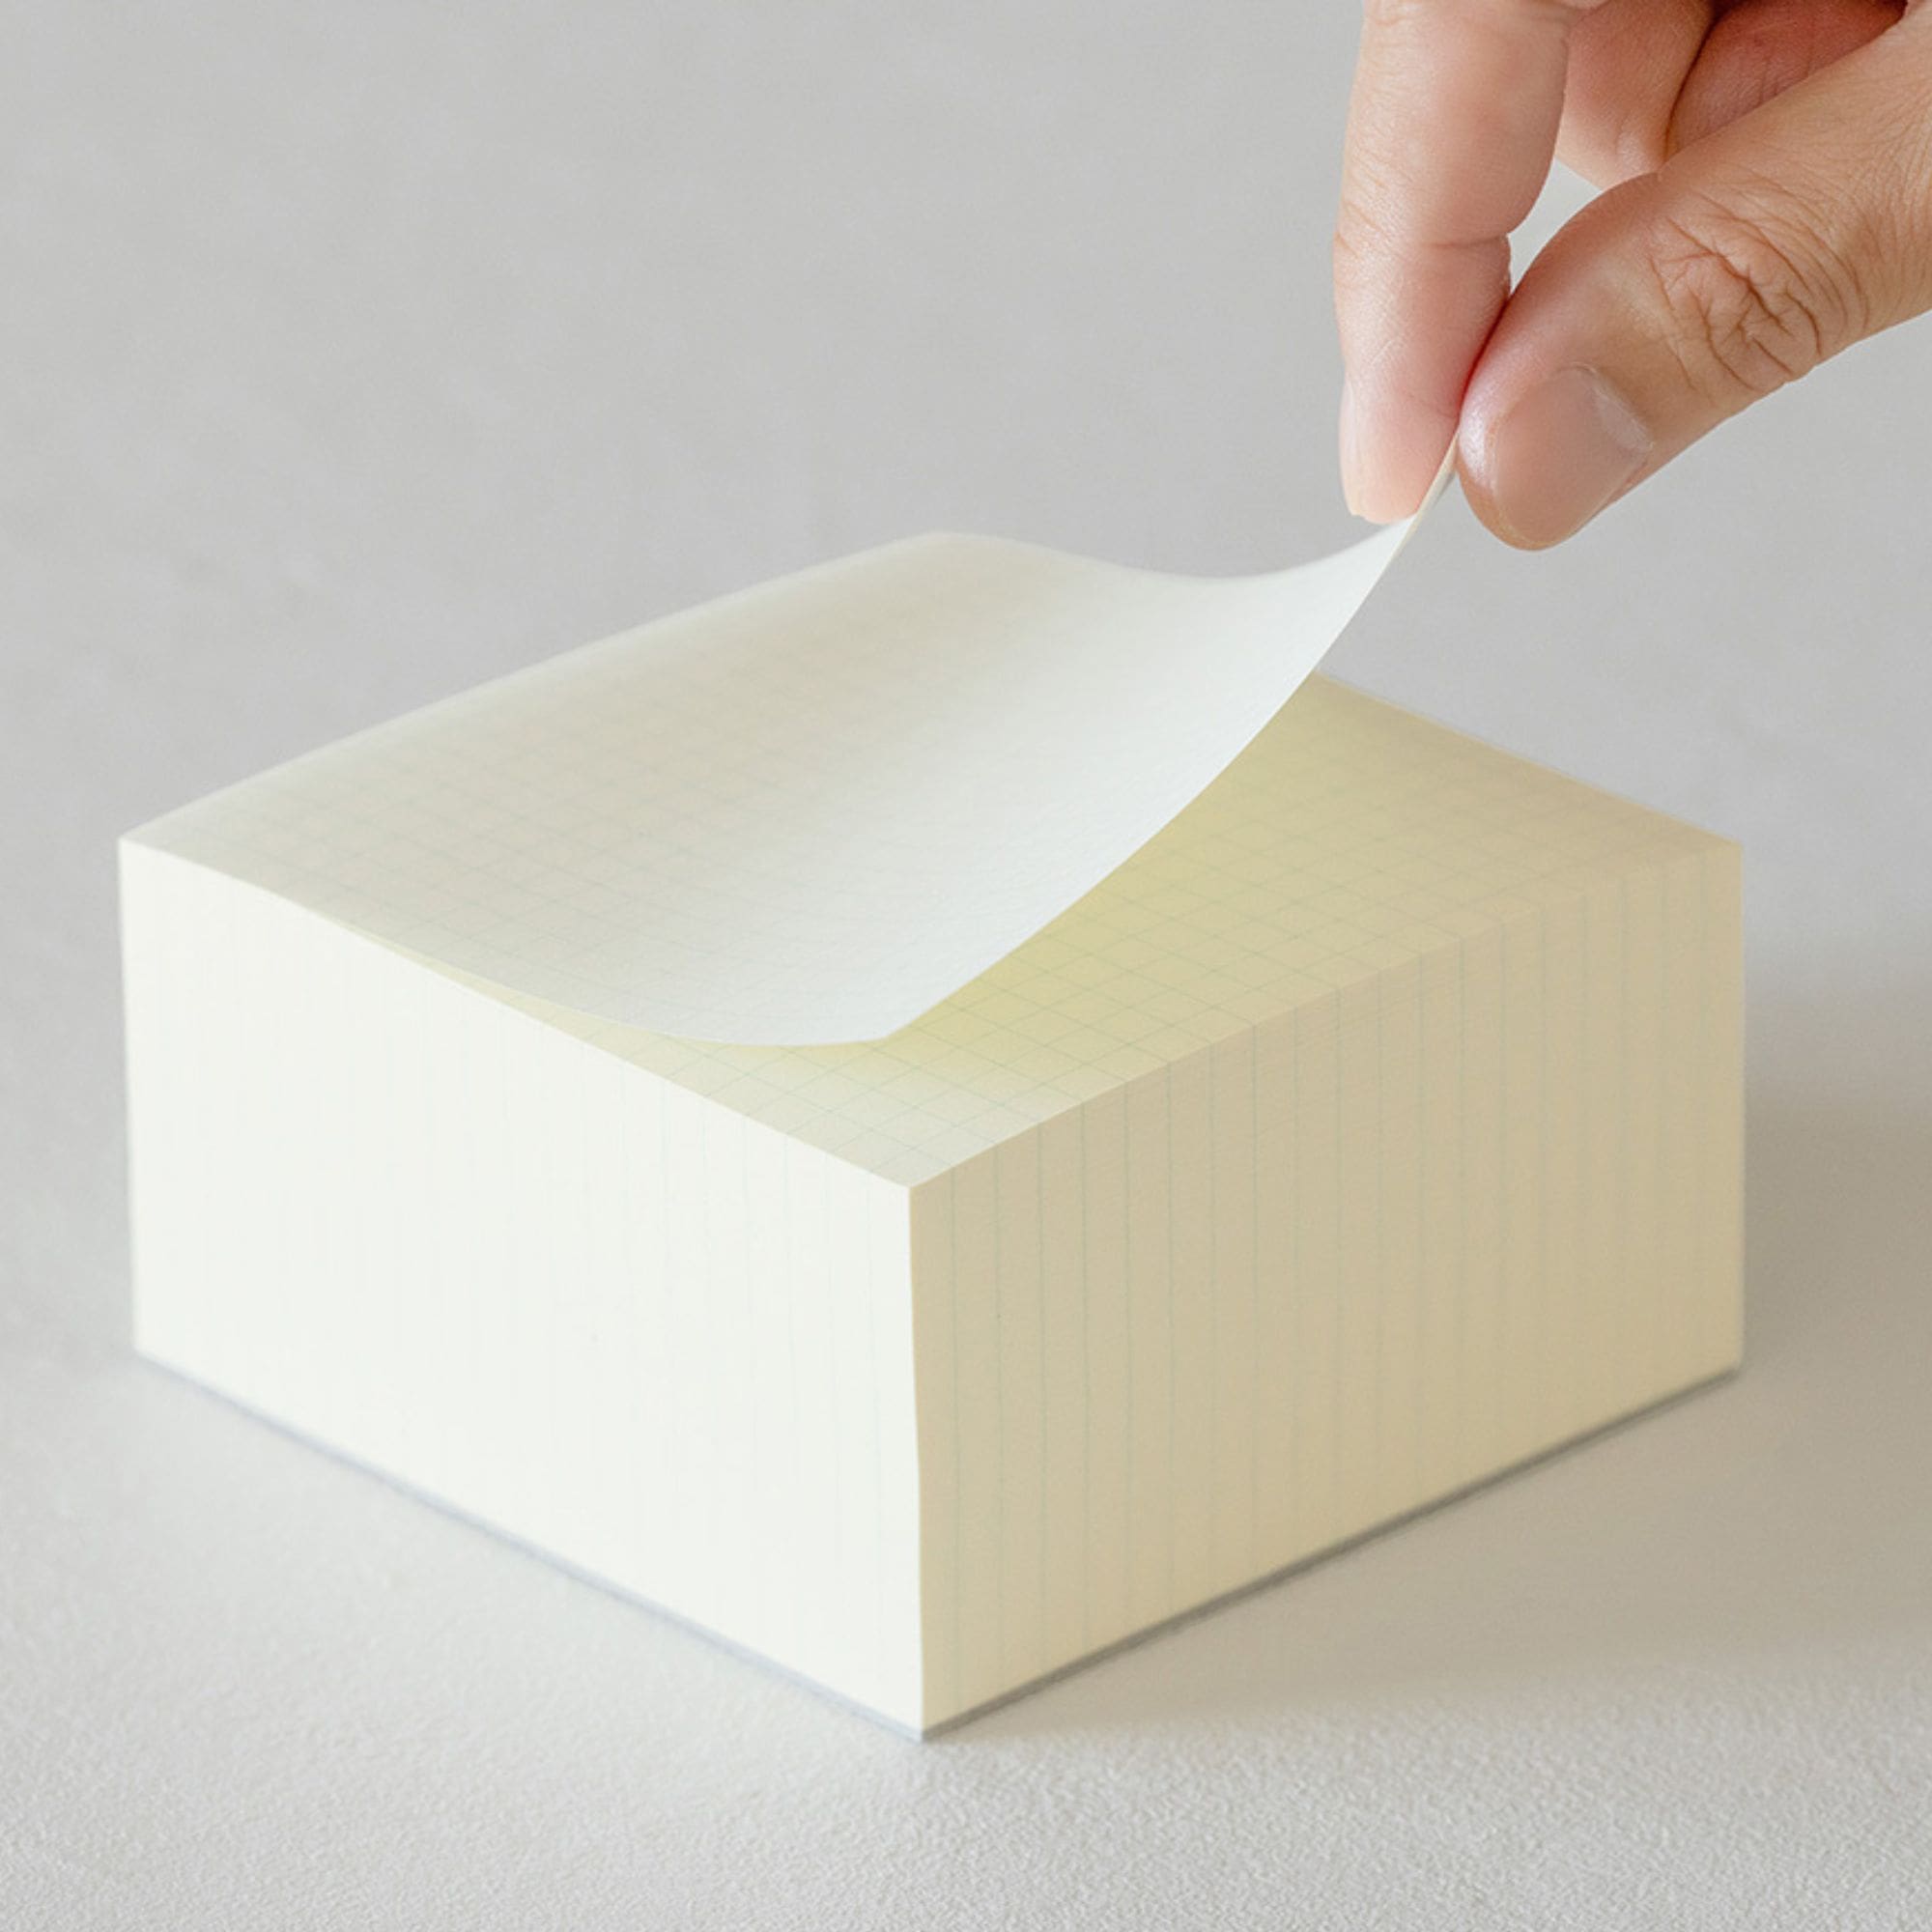 Midori MD Paper - Grid Memo Block with 500 pages - Paper Kooka Australia